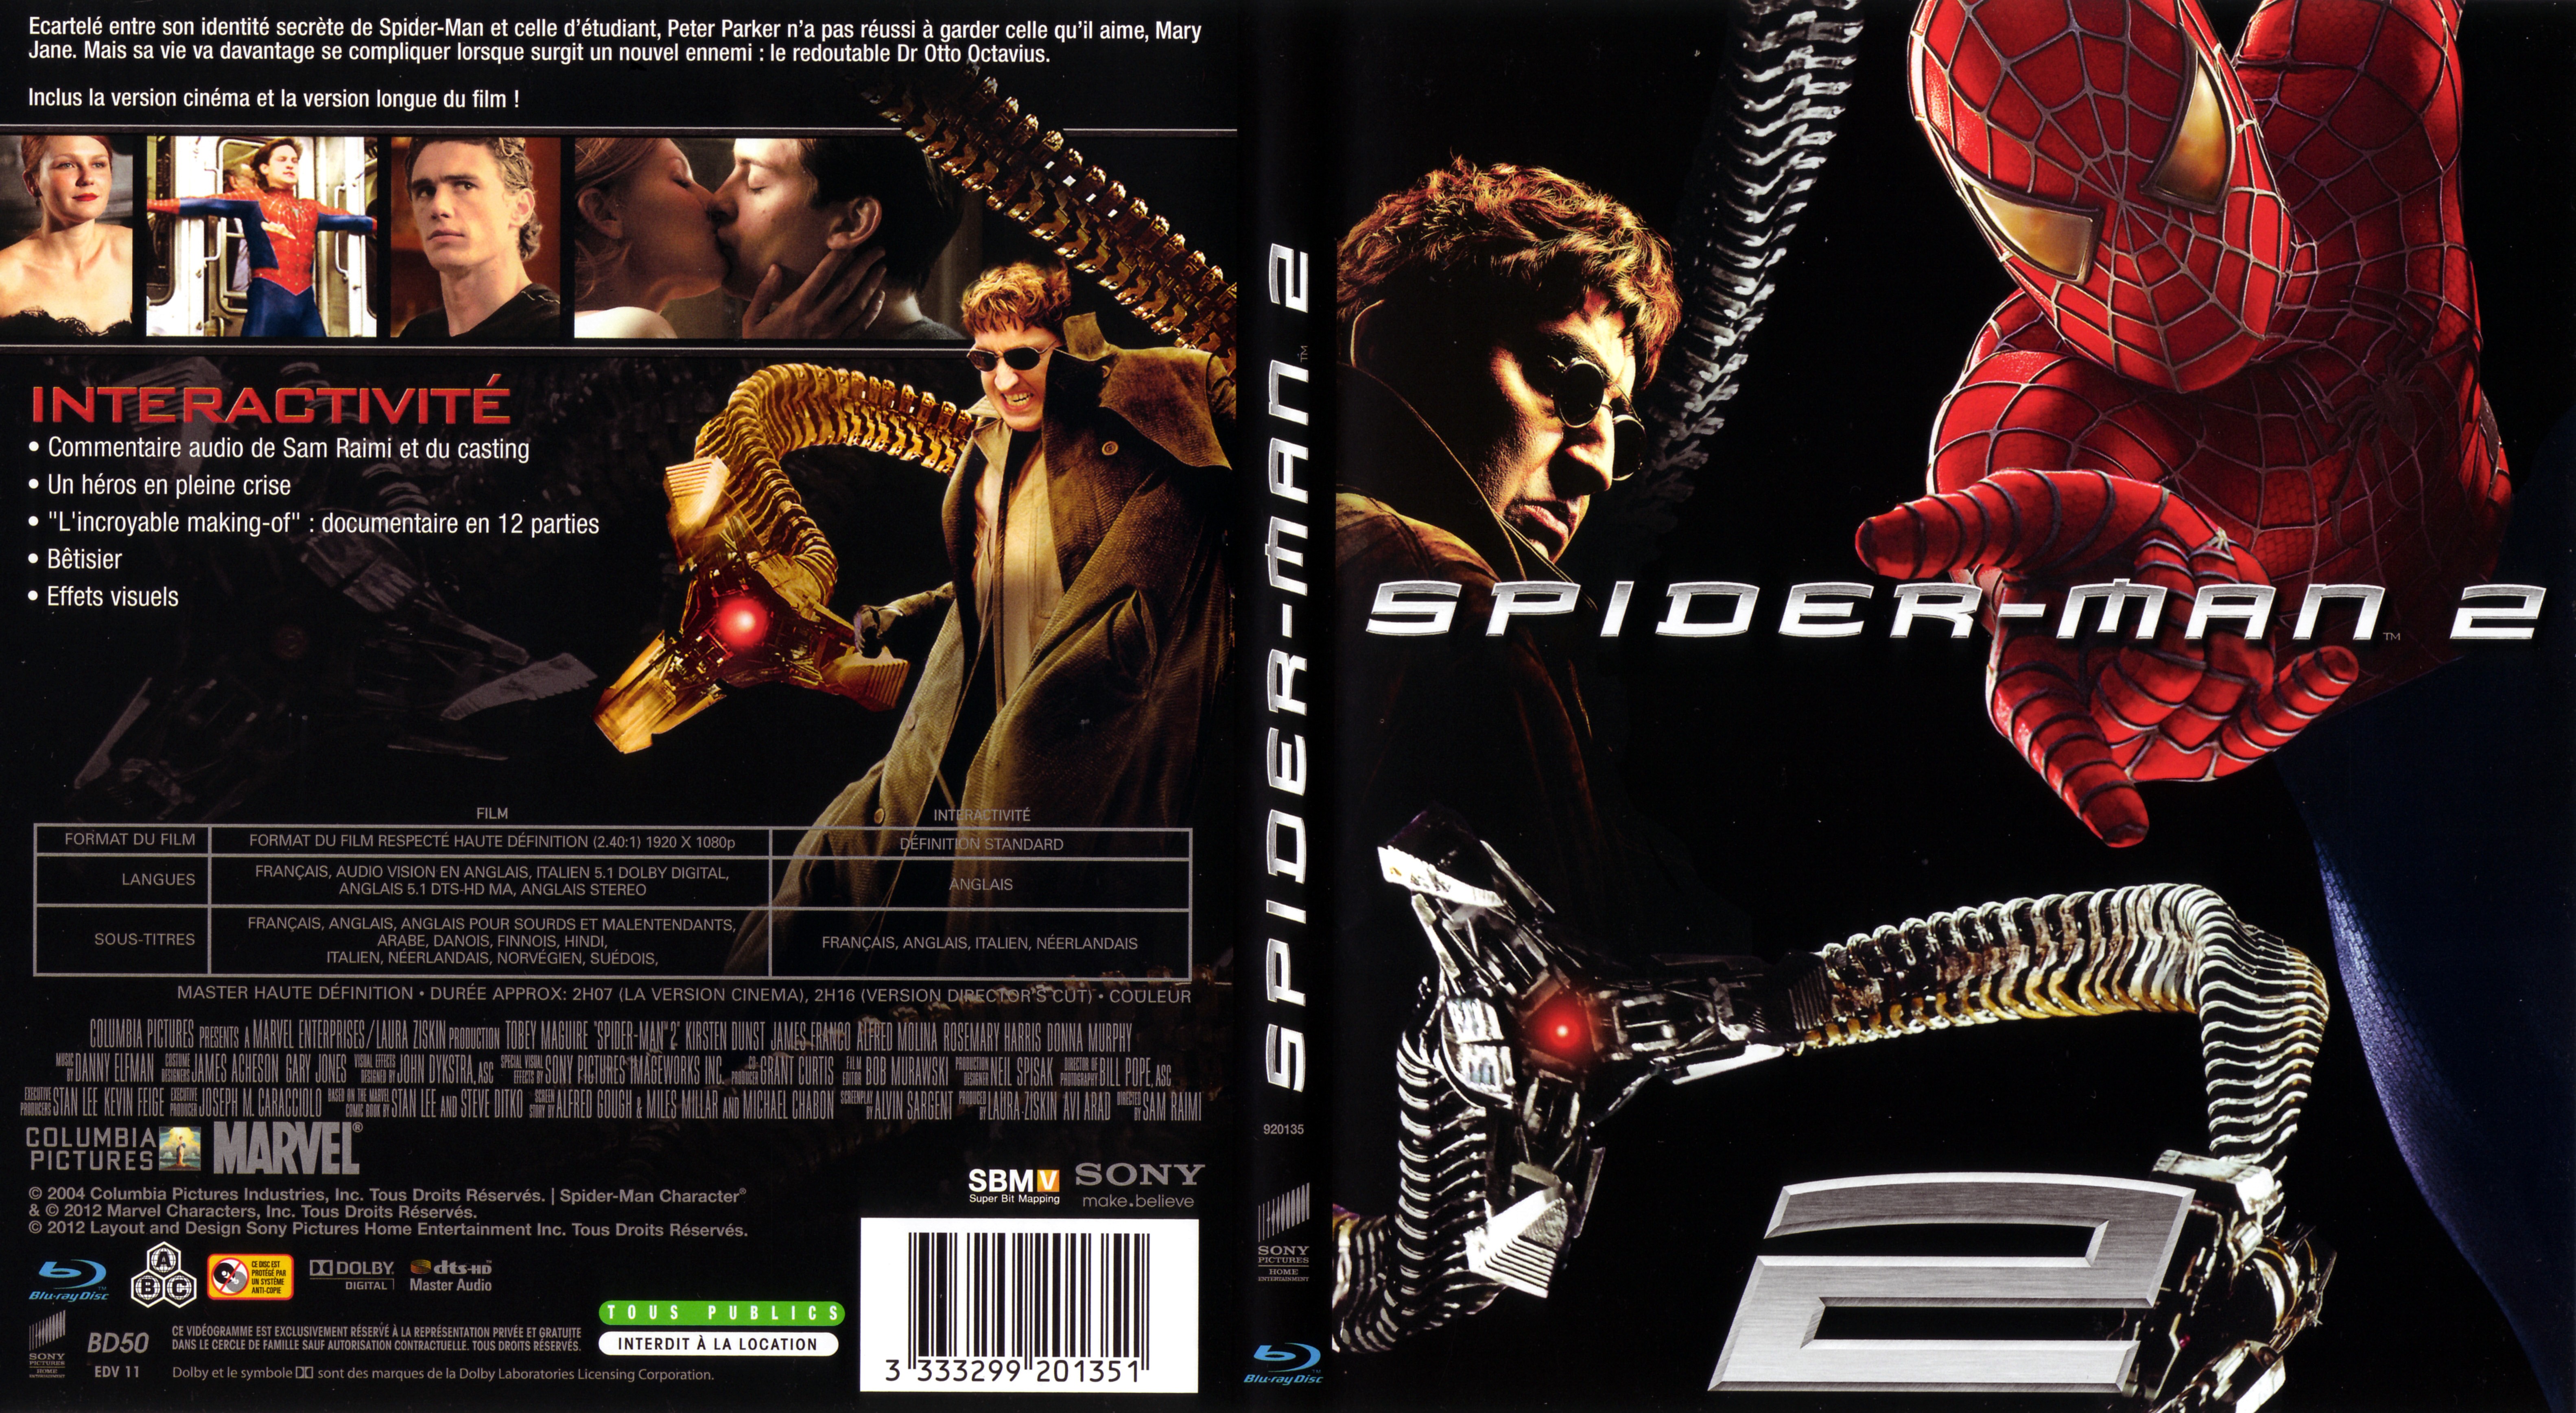 Jaquette DVD Spiderman 2 (BLU-RAY) v4